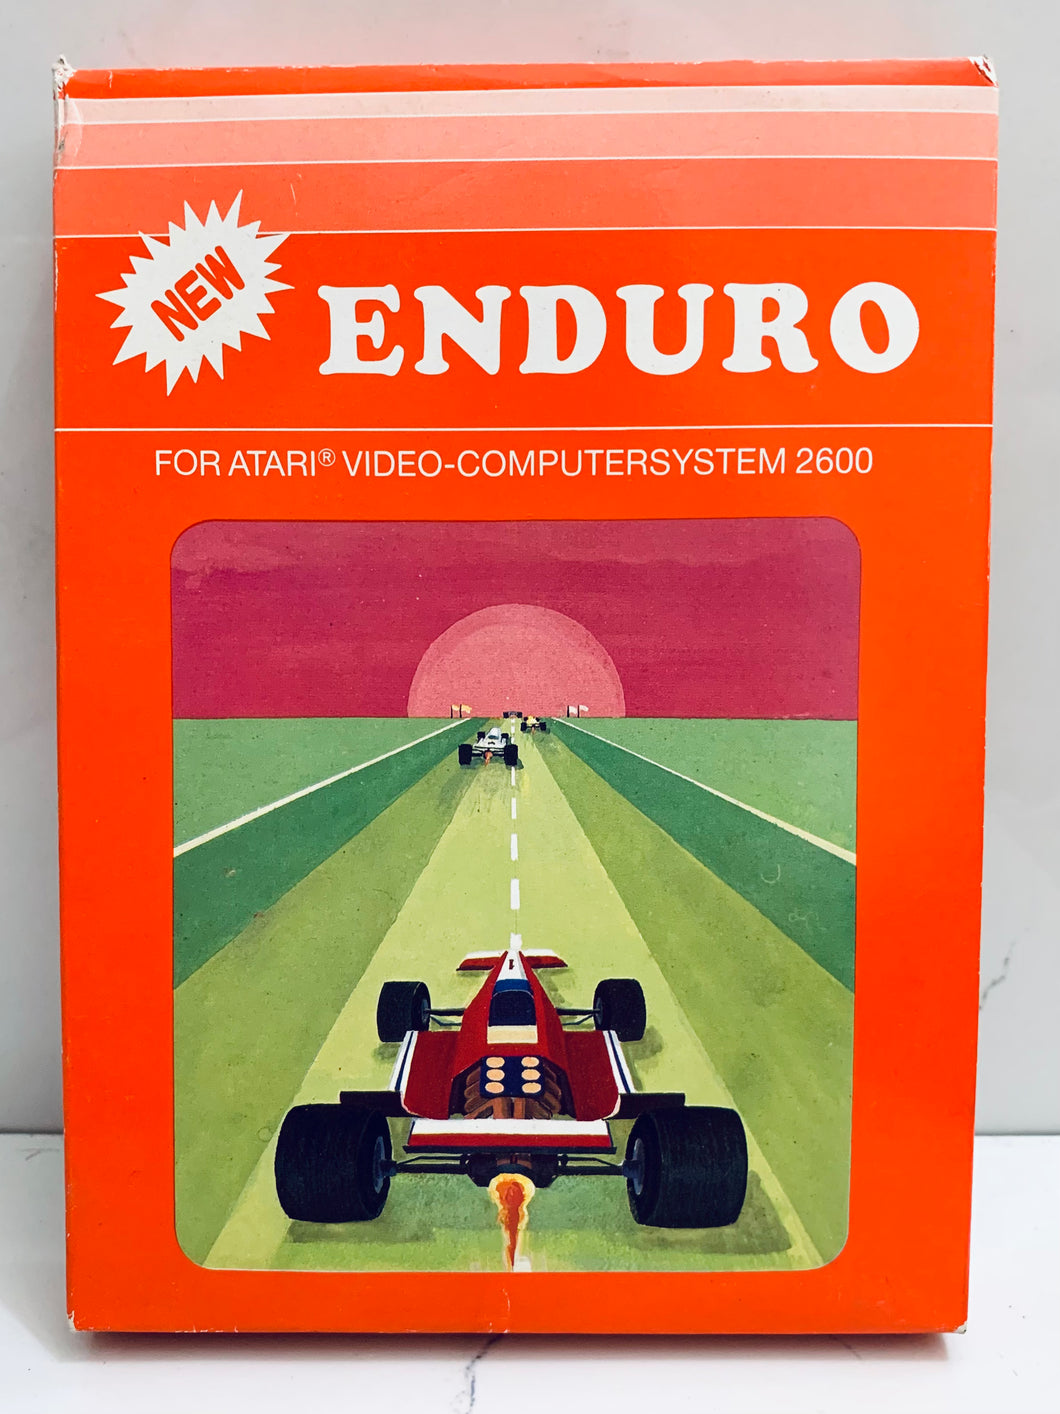 Enduro - Atari VCS 2600 - NTSC - CIB